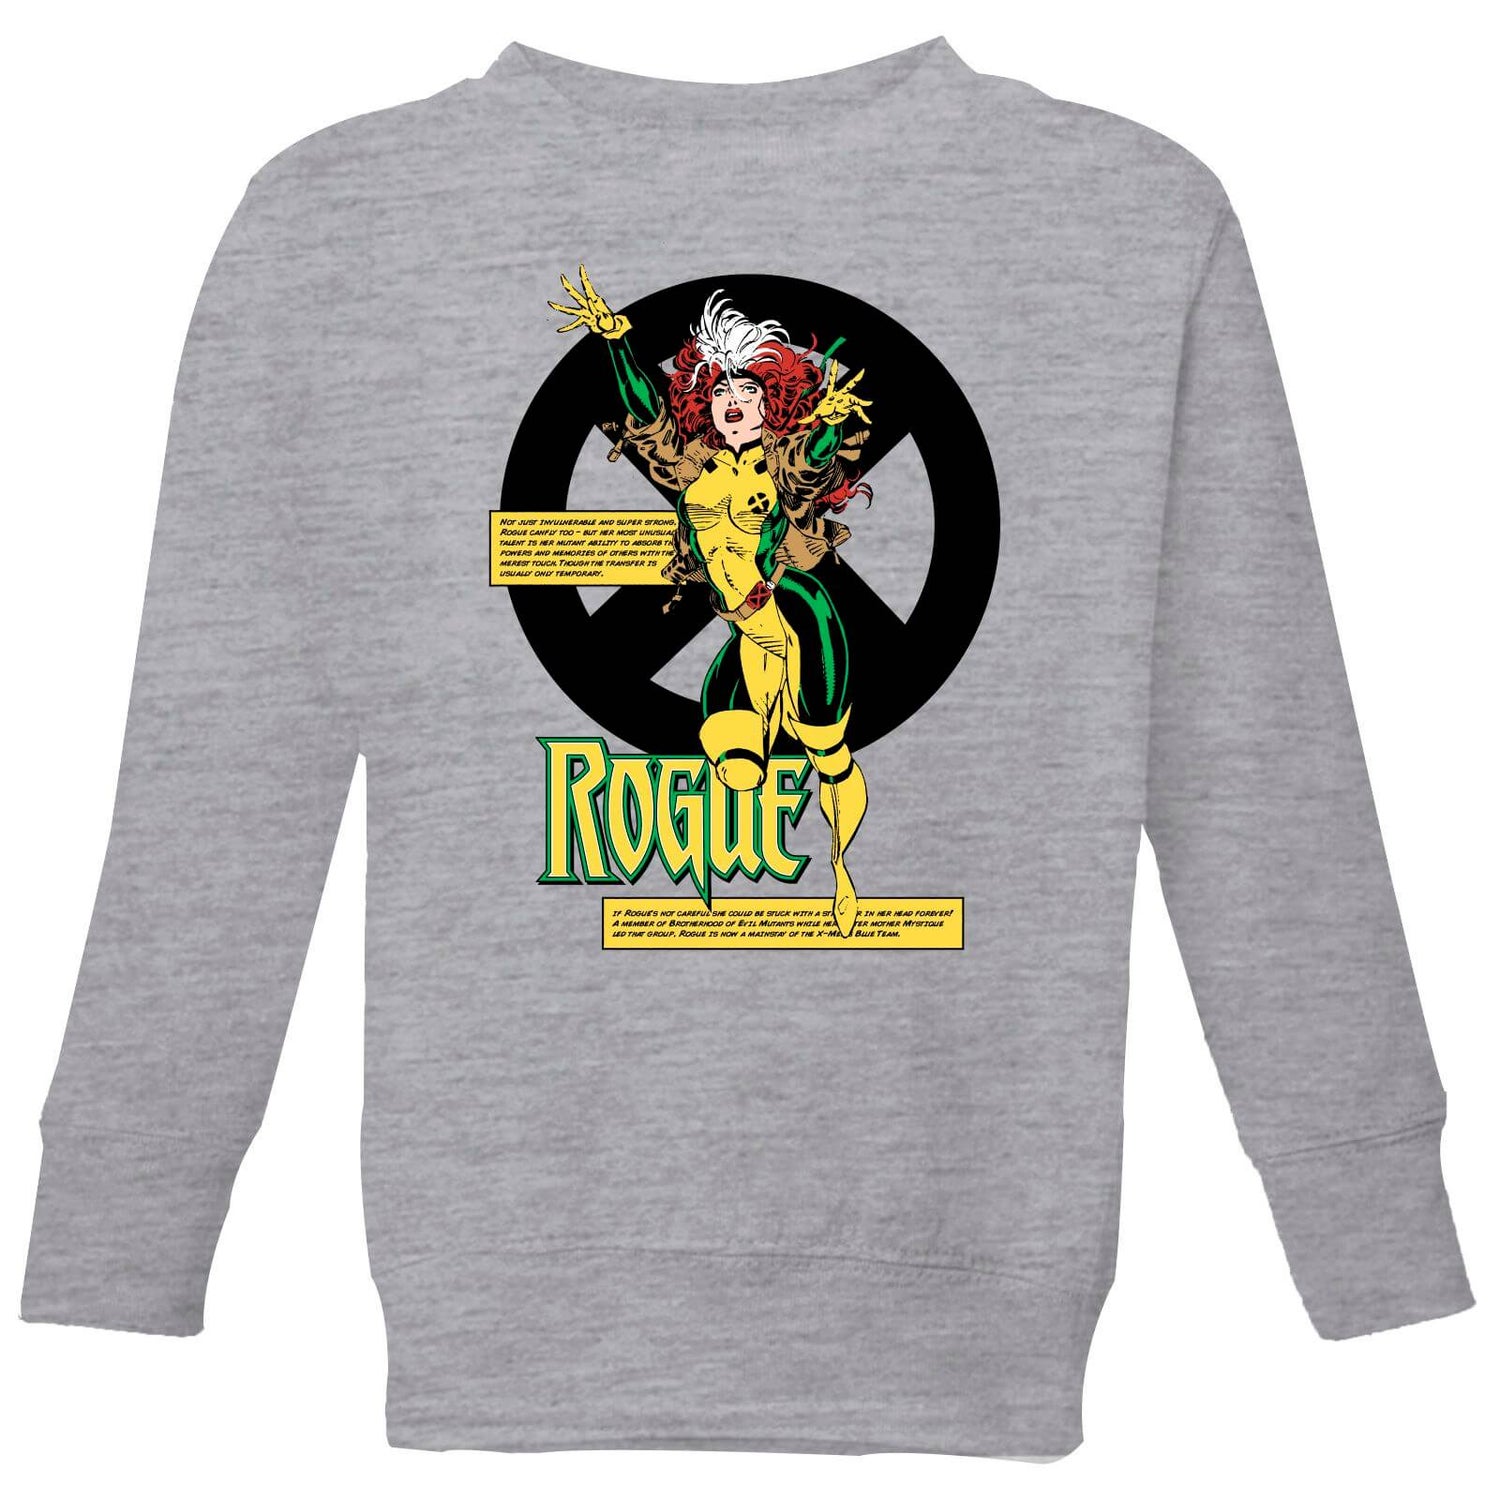 X-Men Rogue Bio Kids' Sweatshirt - Grey